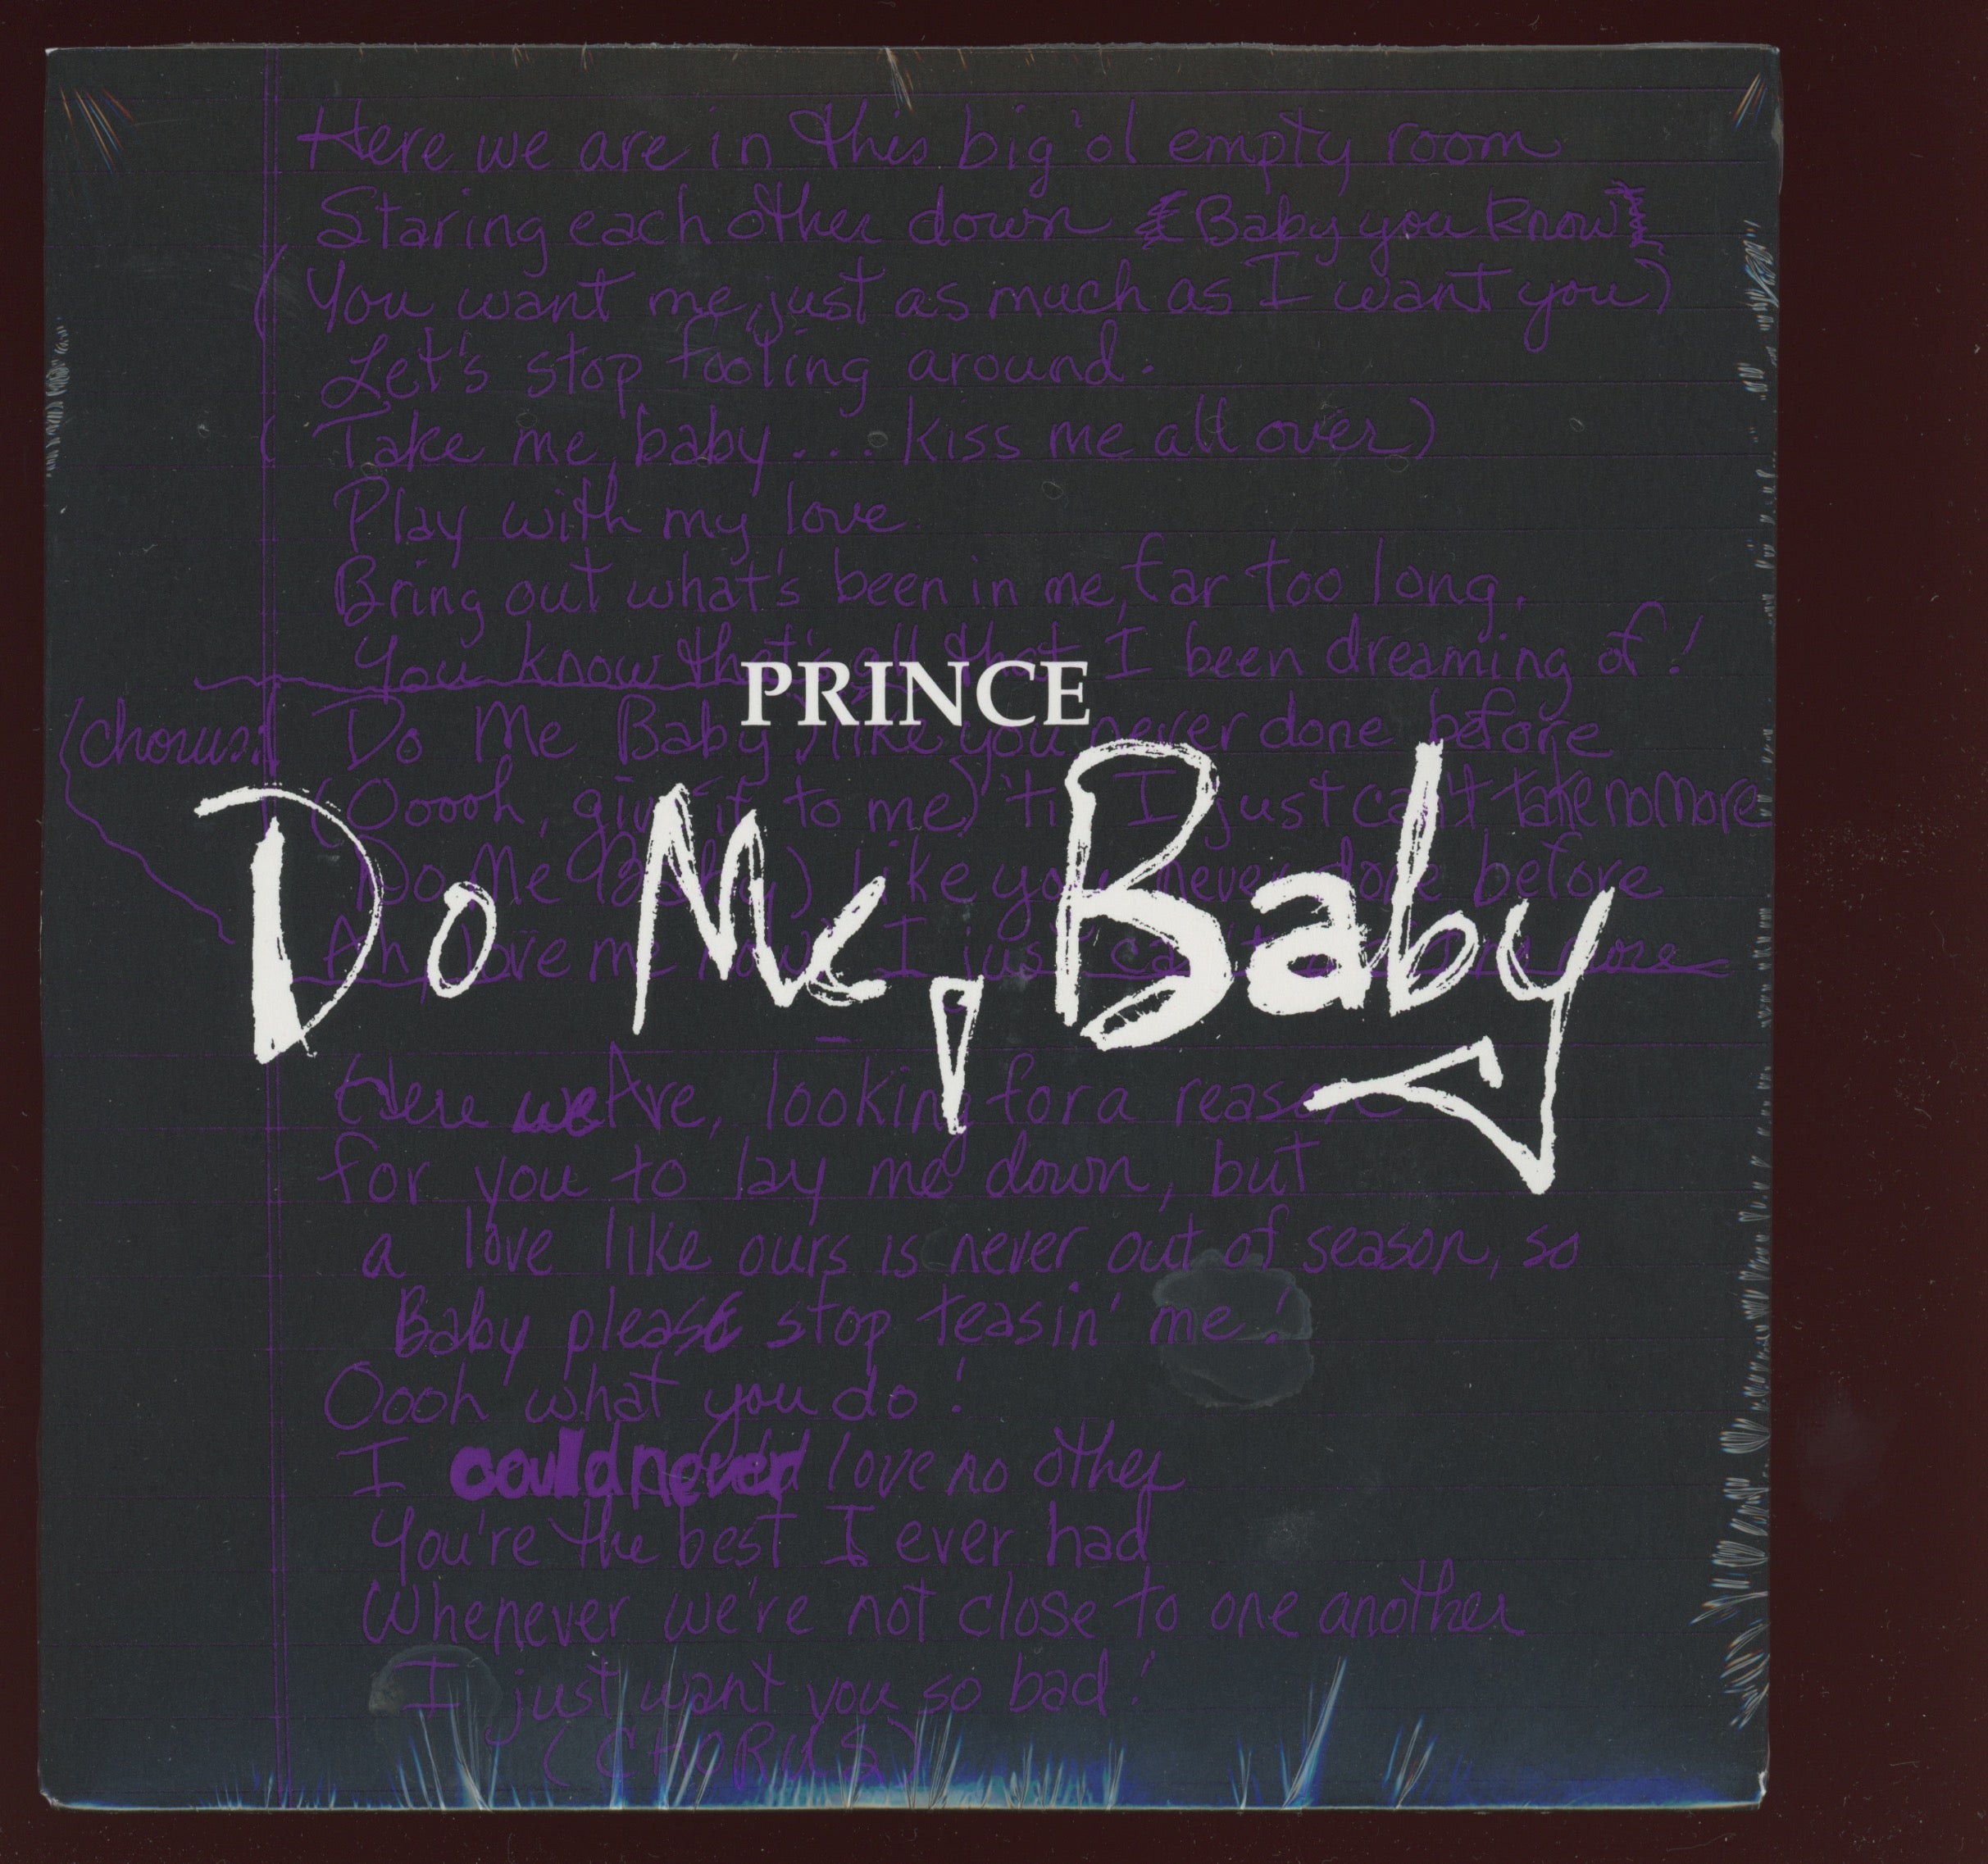 Prince - Do Me, Baby on NPG Warner Single Sided Etched Ltd Numbered Purple Sealed